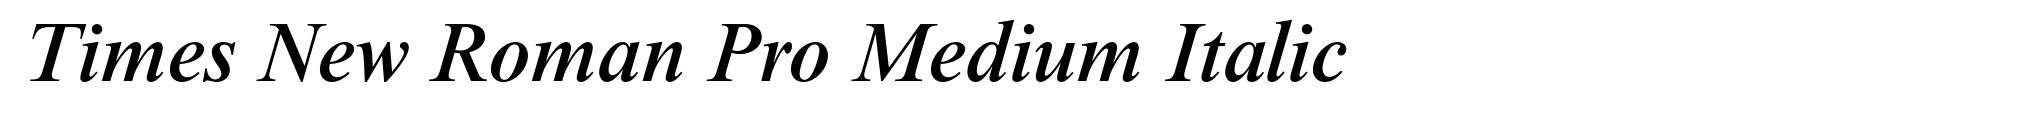 Times New Roman Pro Medium Italic image